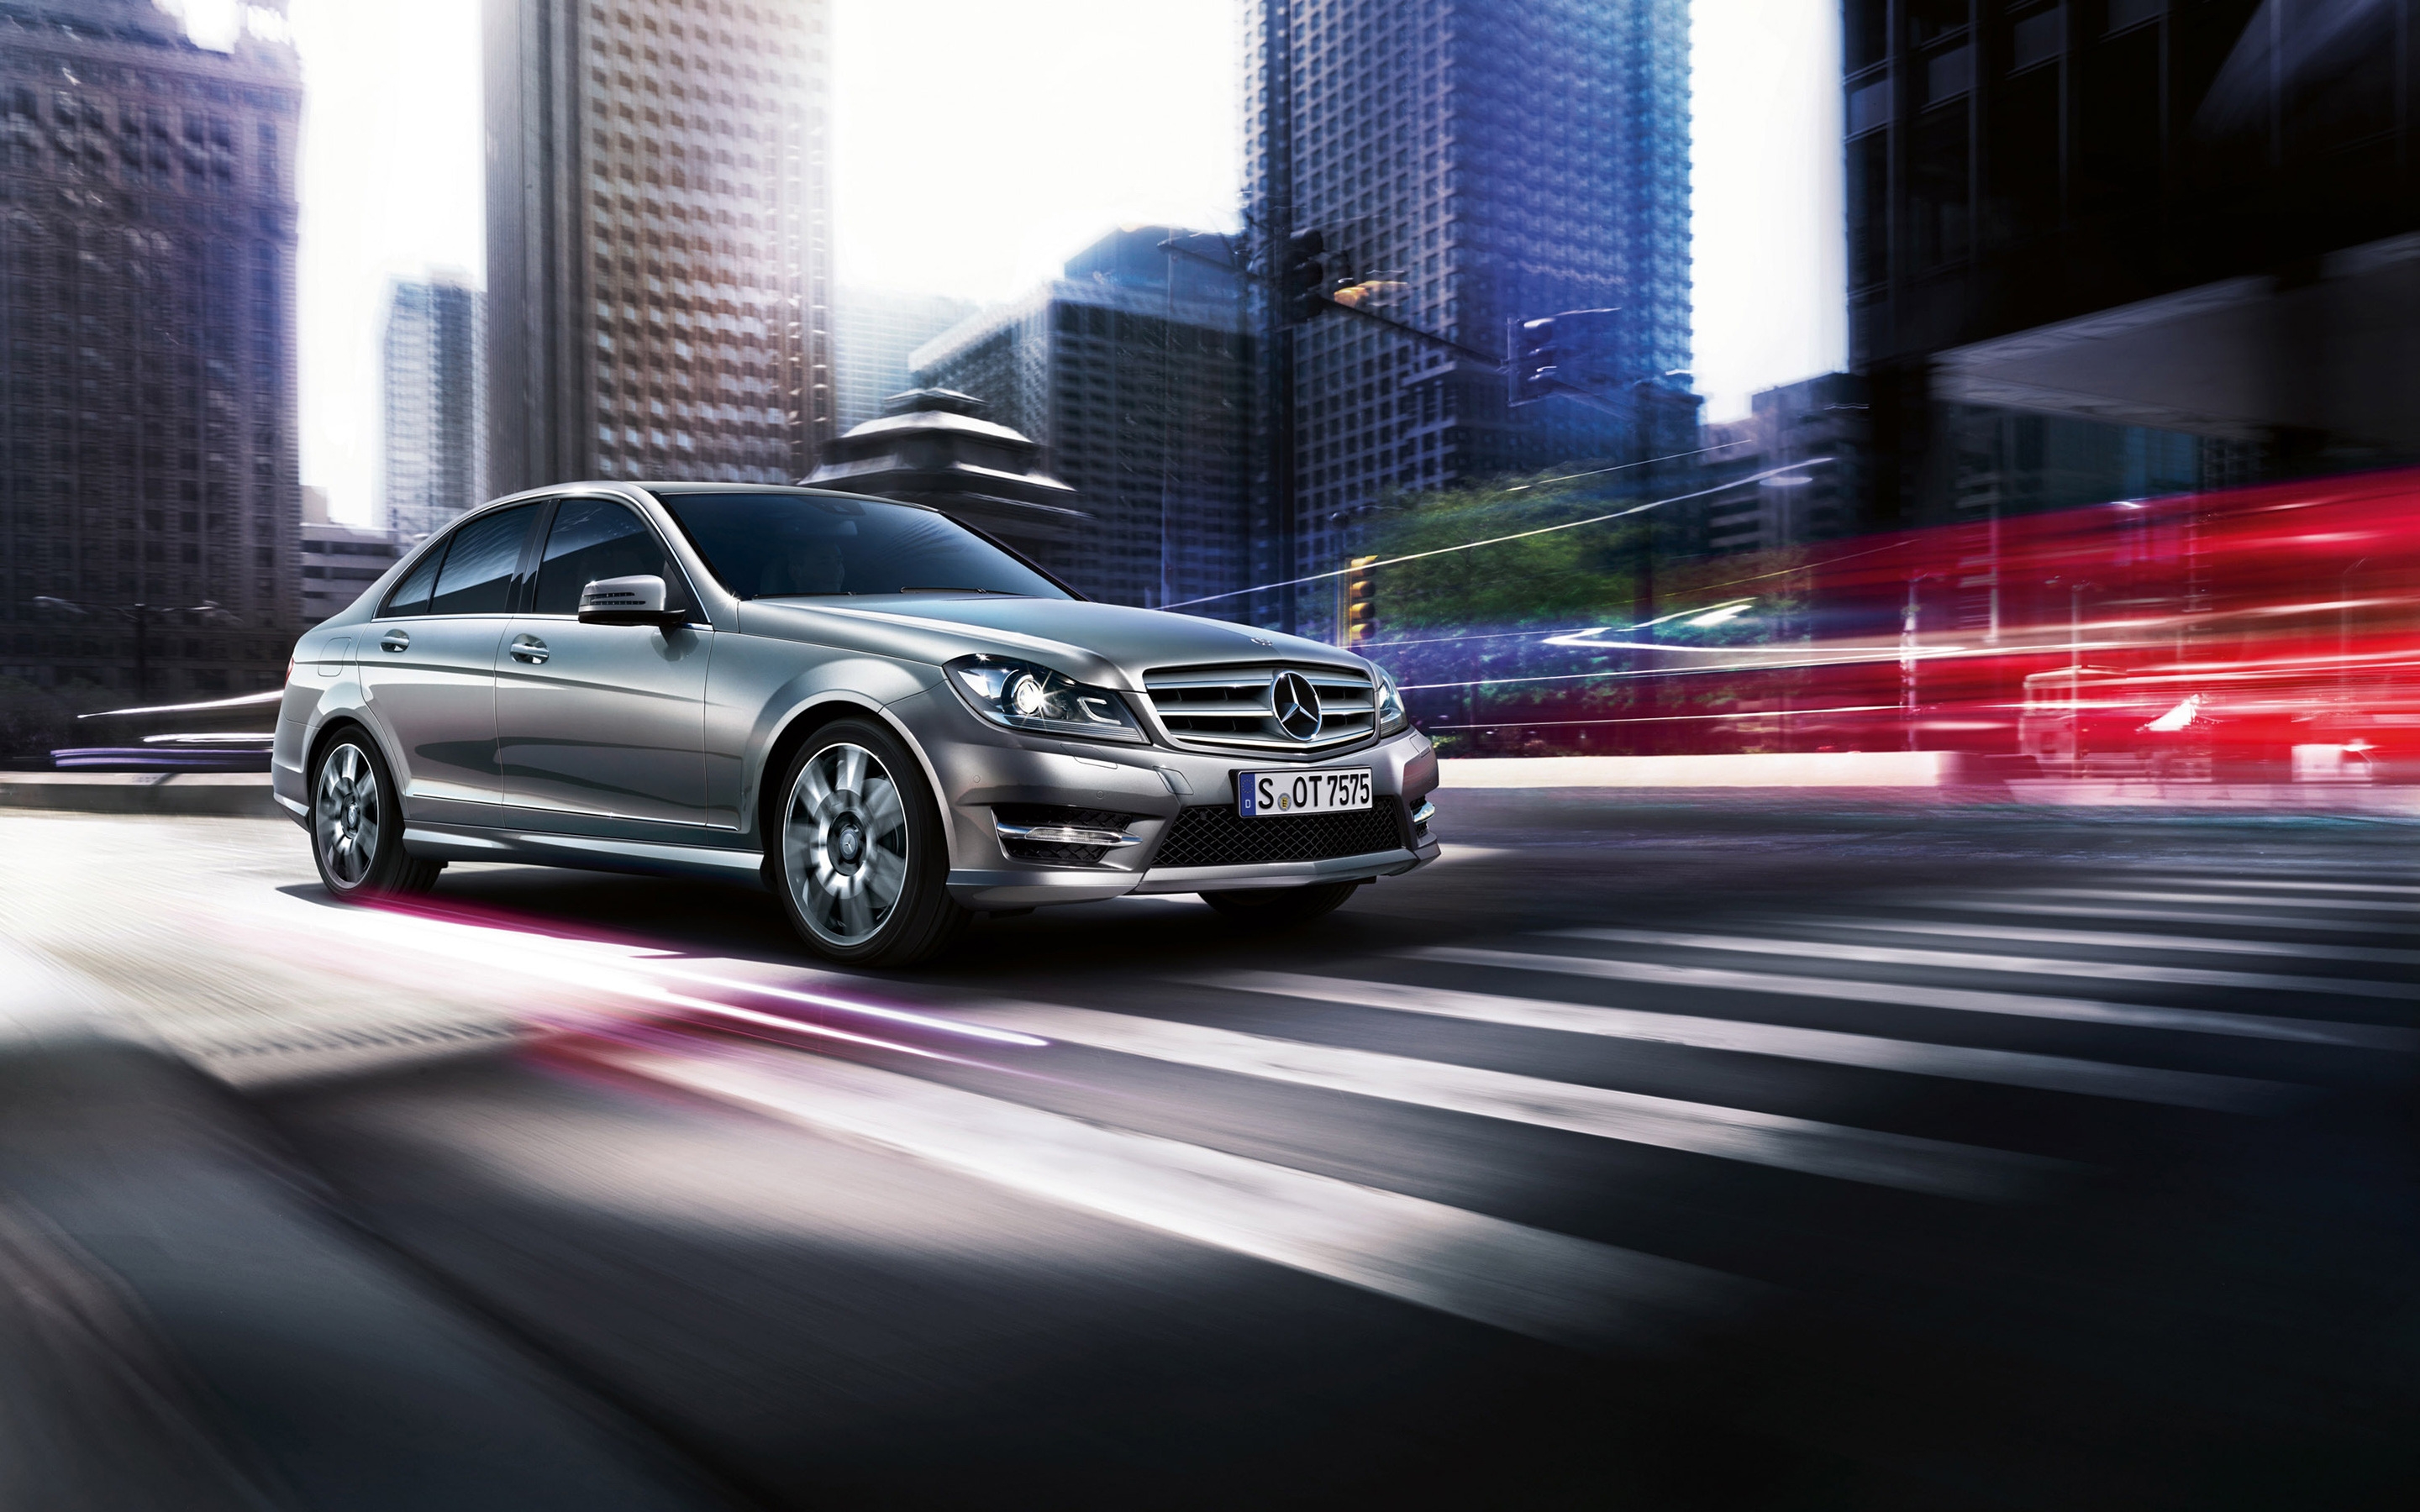 2013 Mercedes-Benz C Class for 2880 x 1800 Retina Display resolution